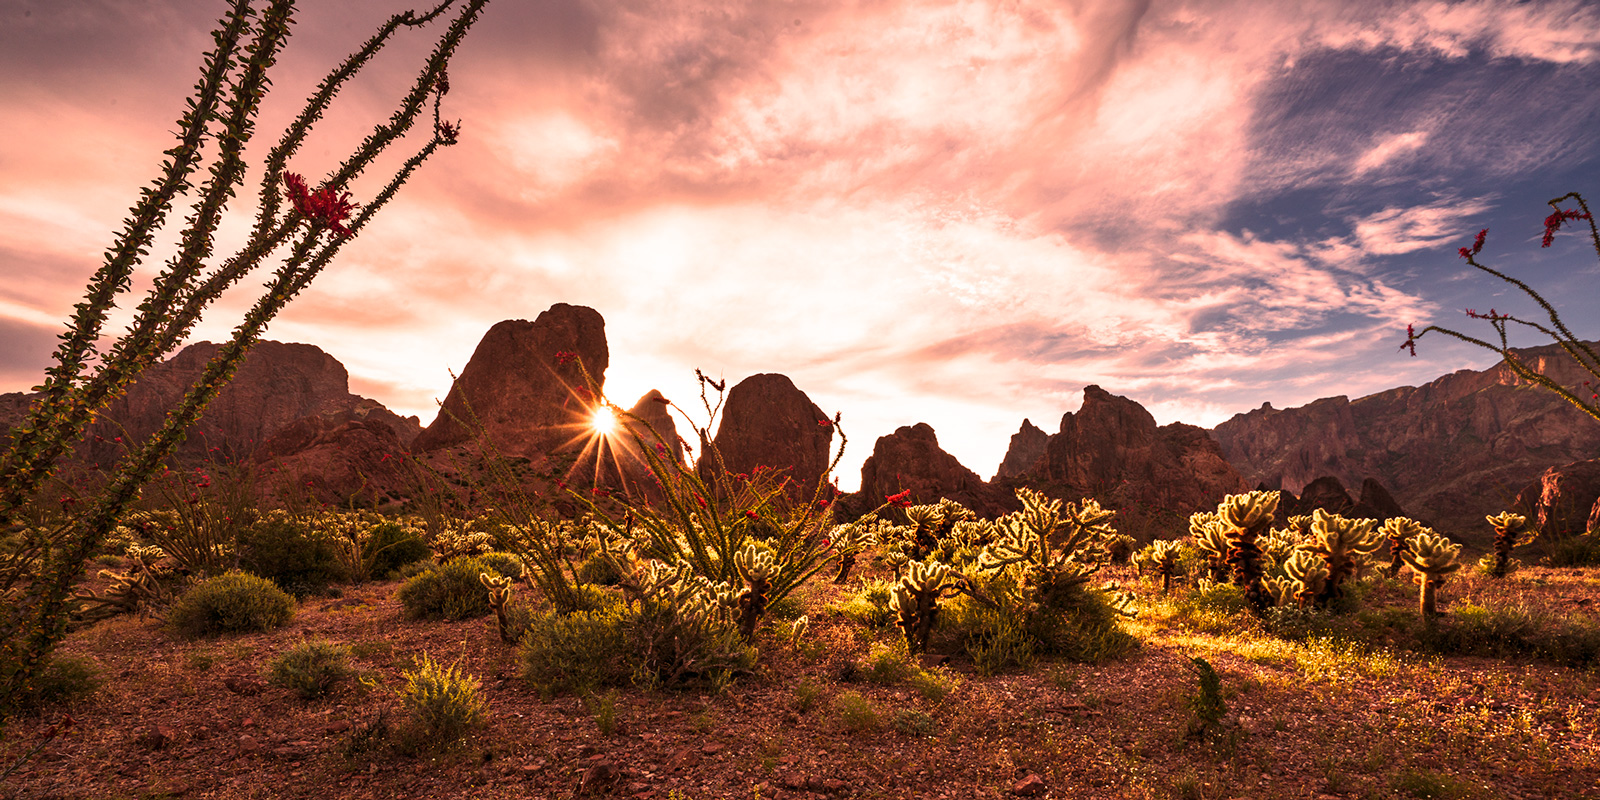 Early morning in the Kofa Mountains of southeast Arizona